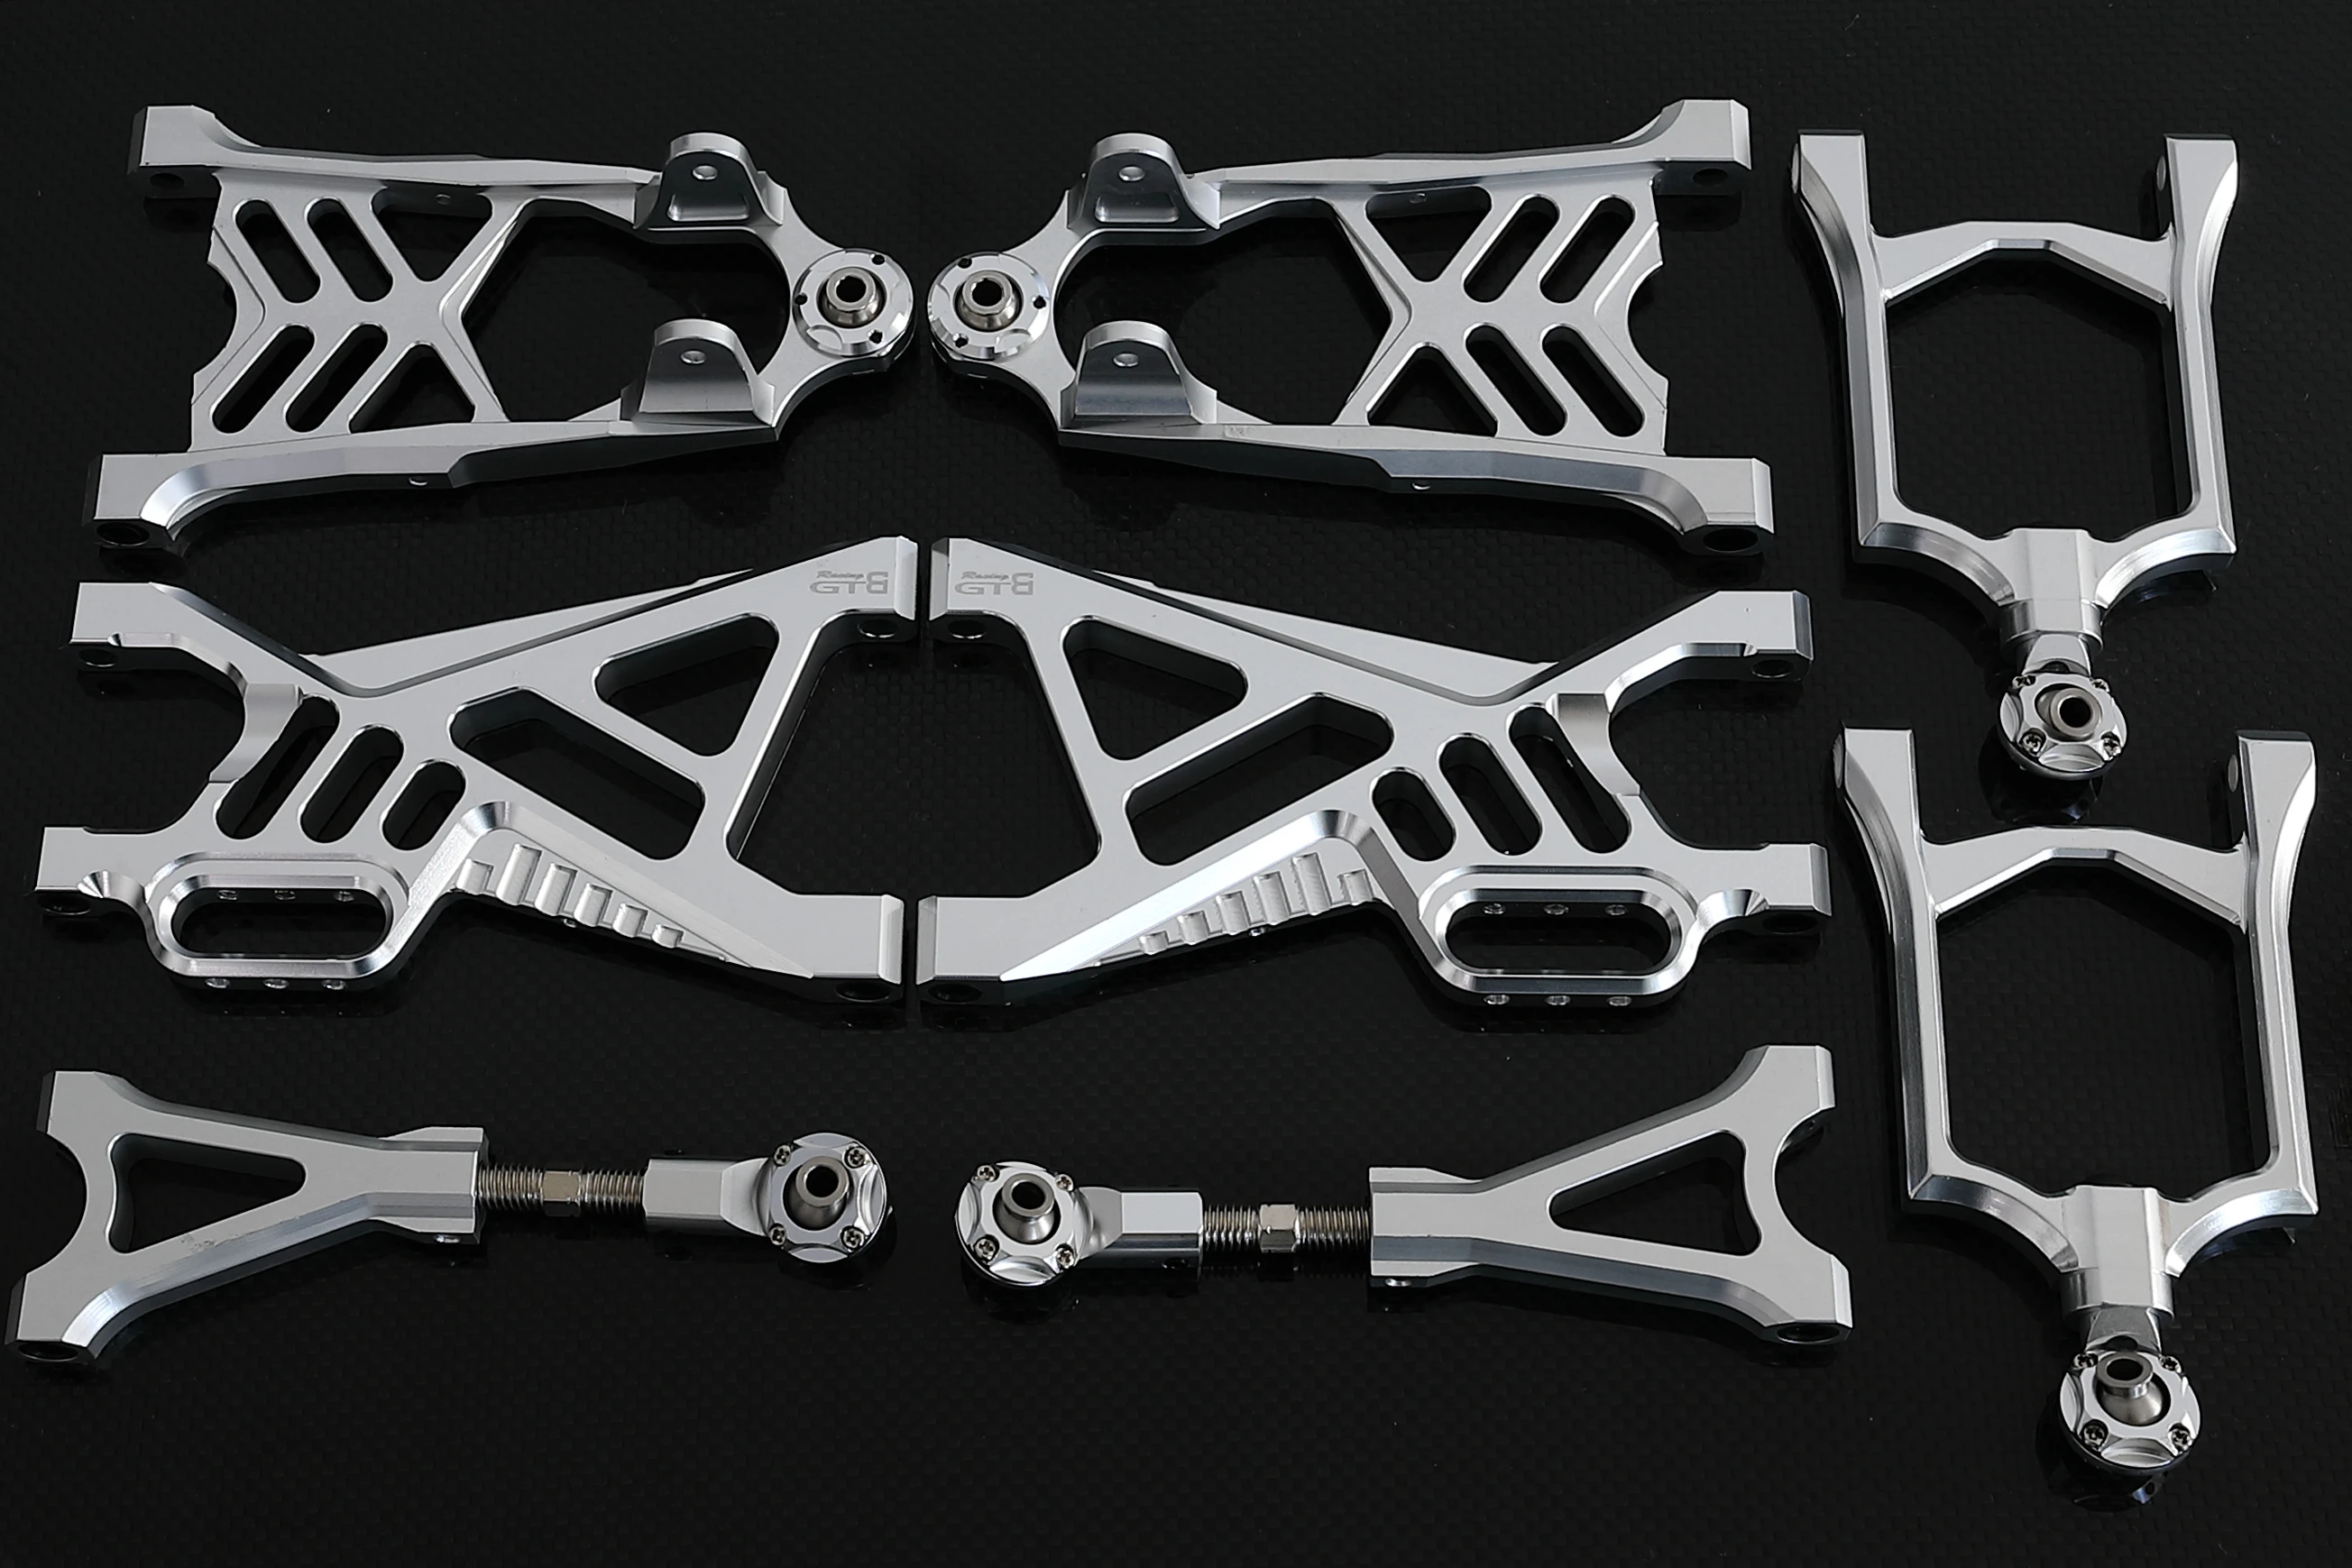 GTBracing Aluminum Alloy Front and Rear Suspension Arm Set for HPI RC 1/5 Baja 5B | Игрушки и хобби